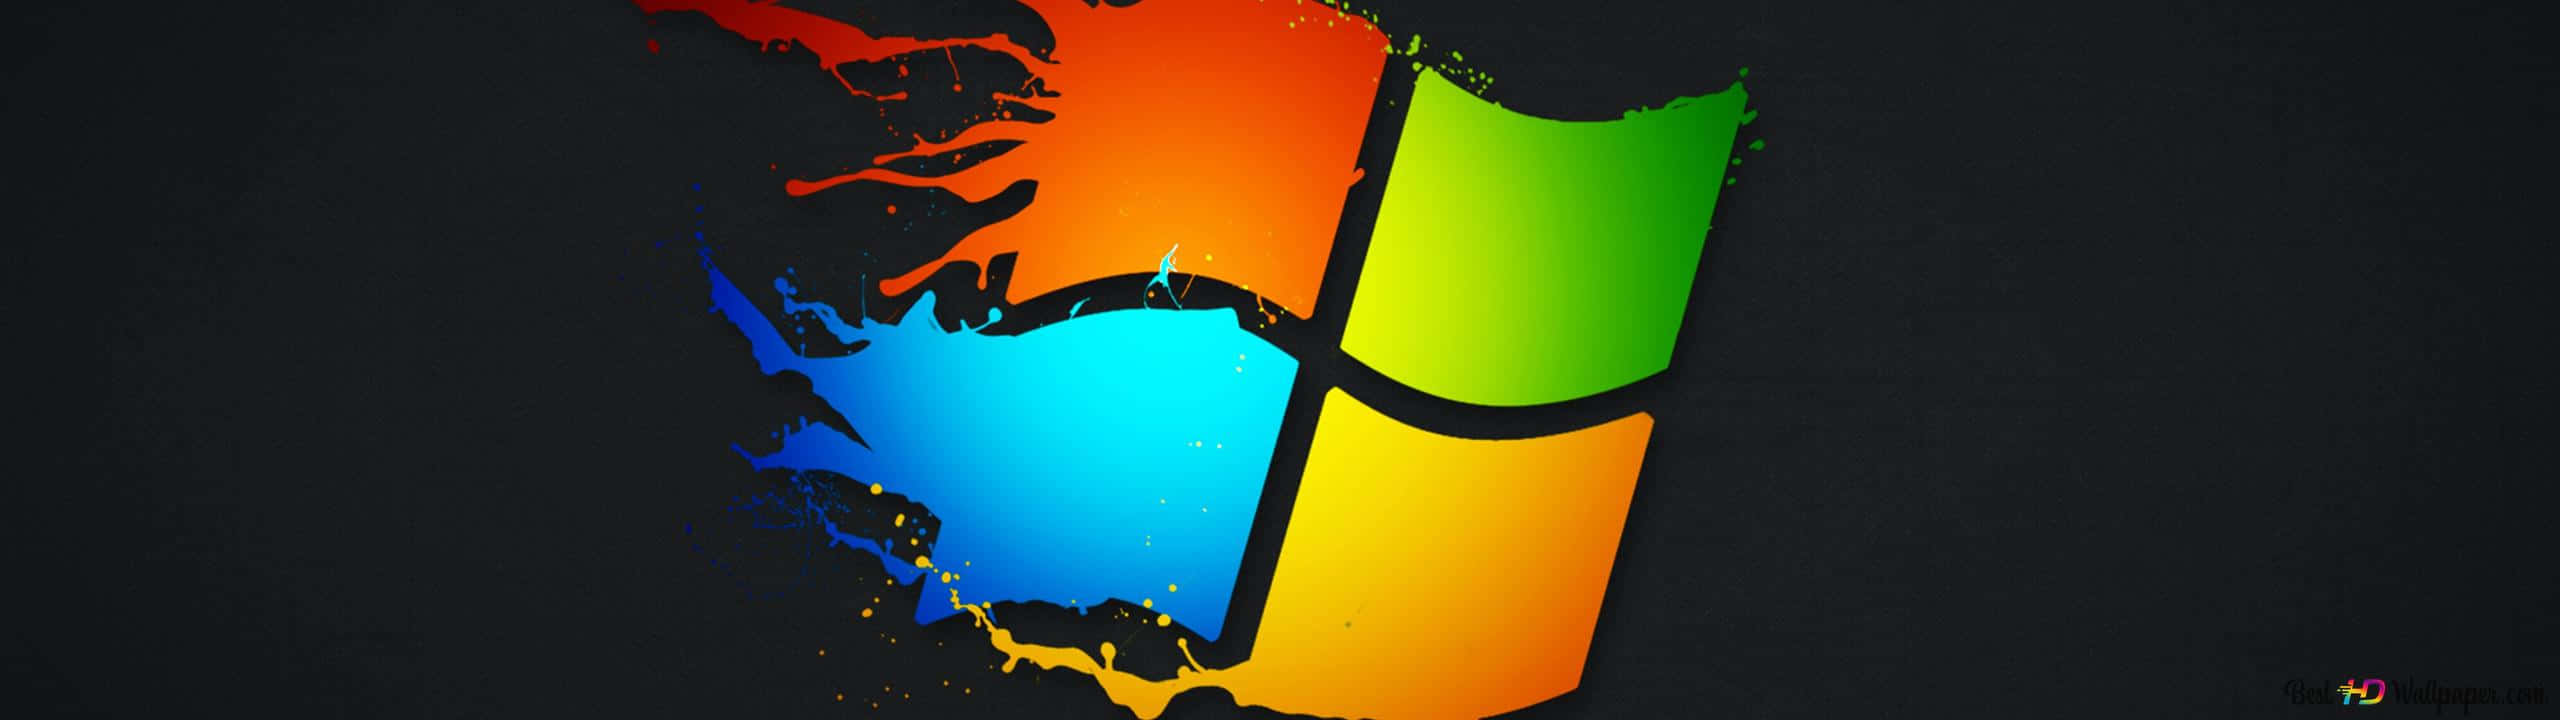 Microsoftwindows Xp-logotypen. Wallpaper